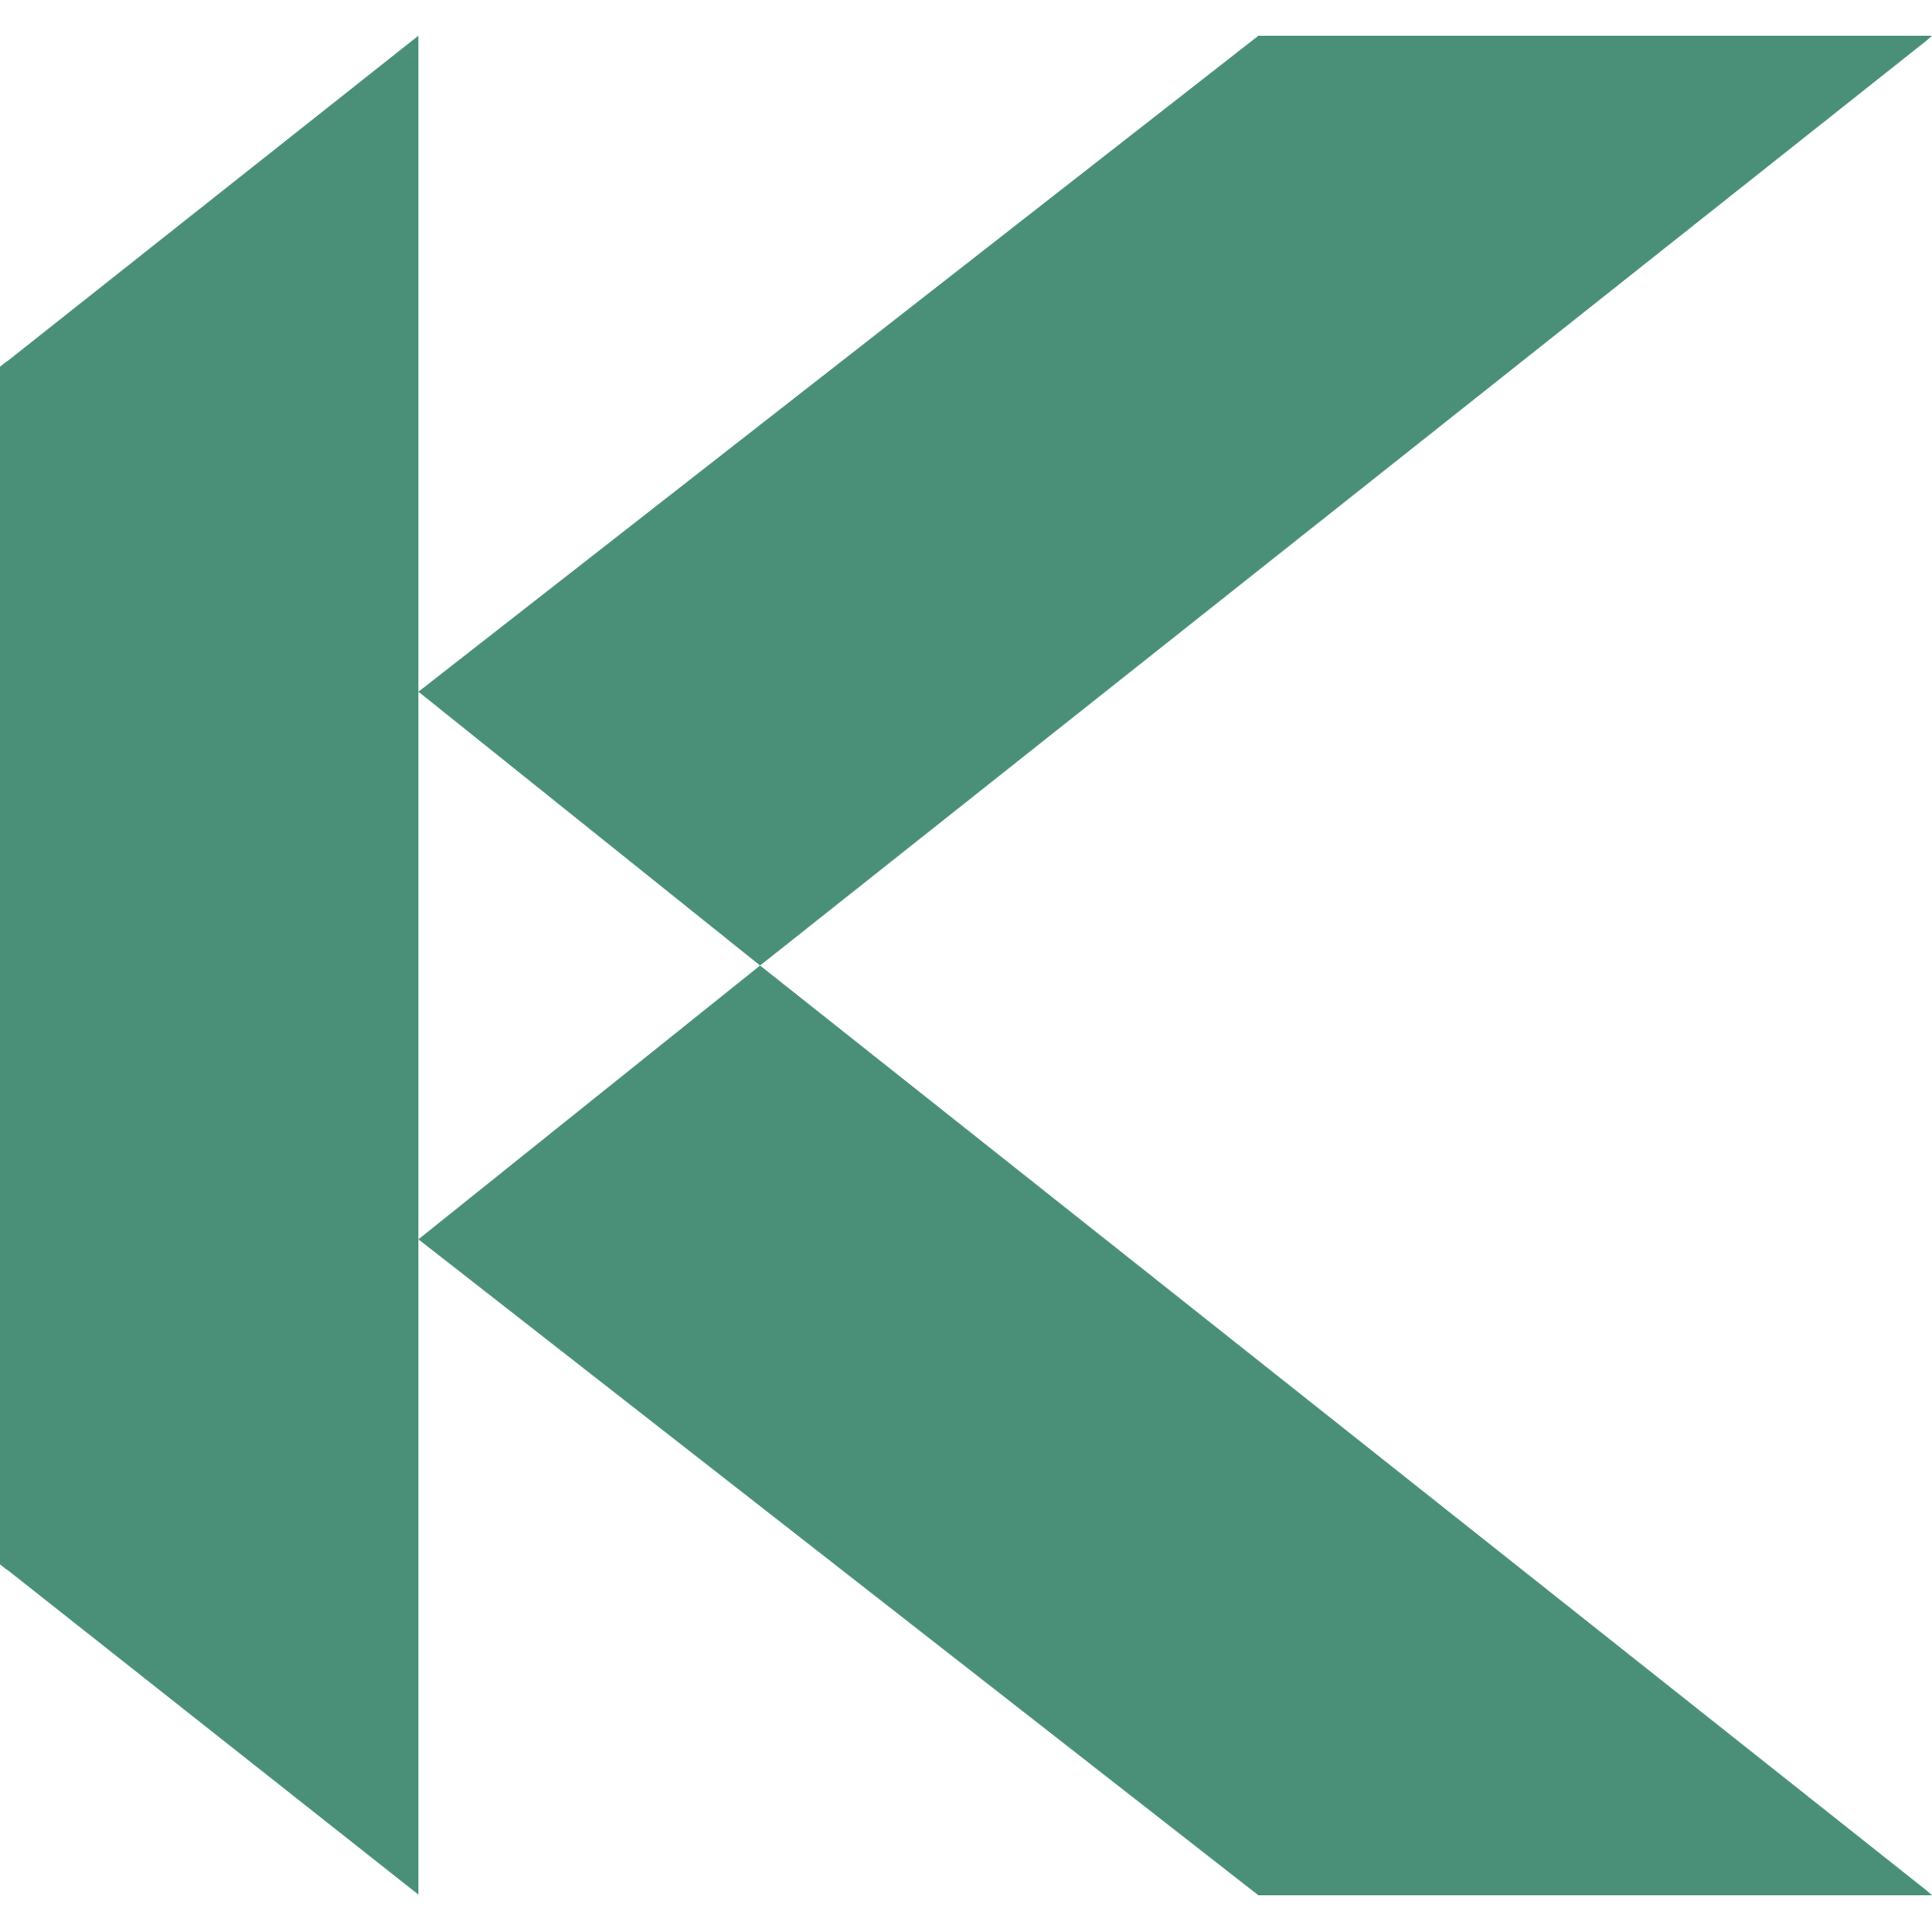 Kadena (KDA) Logo .SVG and .PNG Files Download